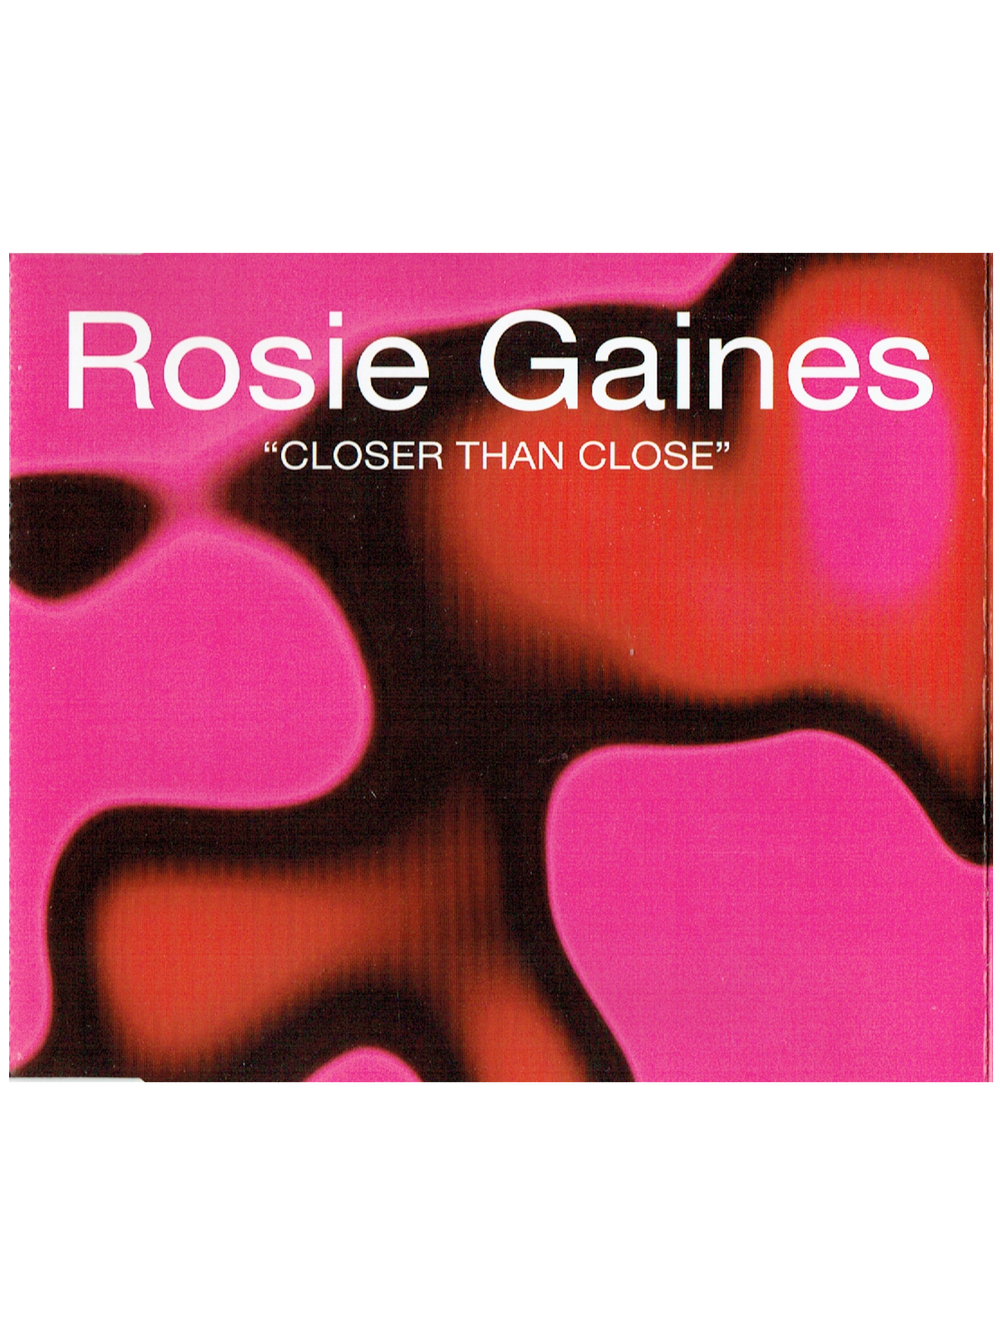 Prince – Rosie Gaines Close Than Close MAXI EU / UK CD Single 6 Tracks Prince